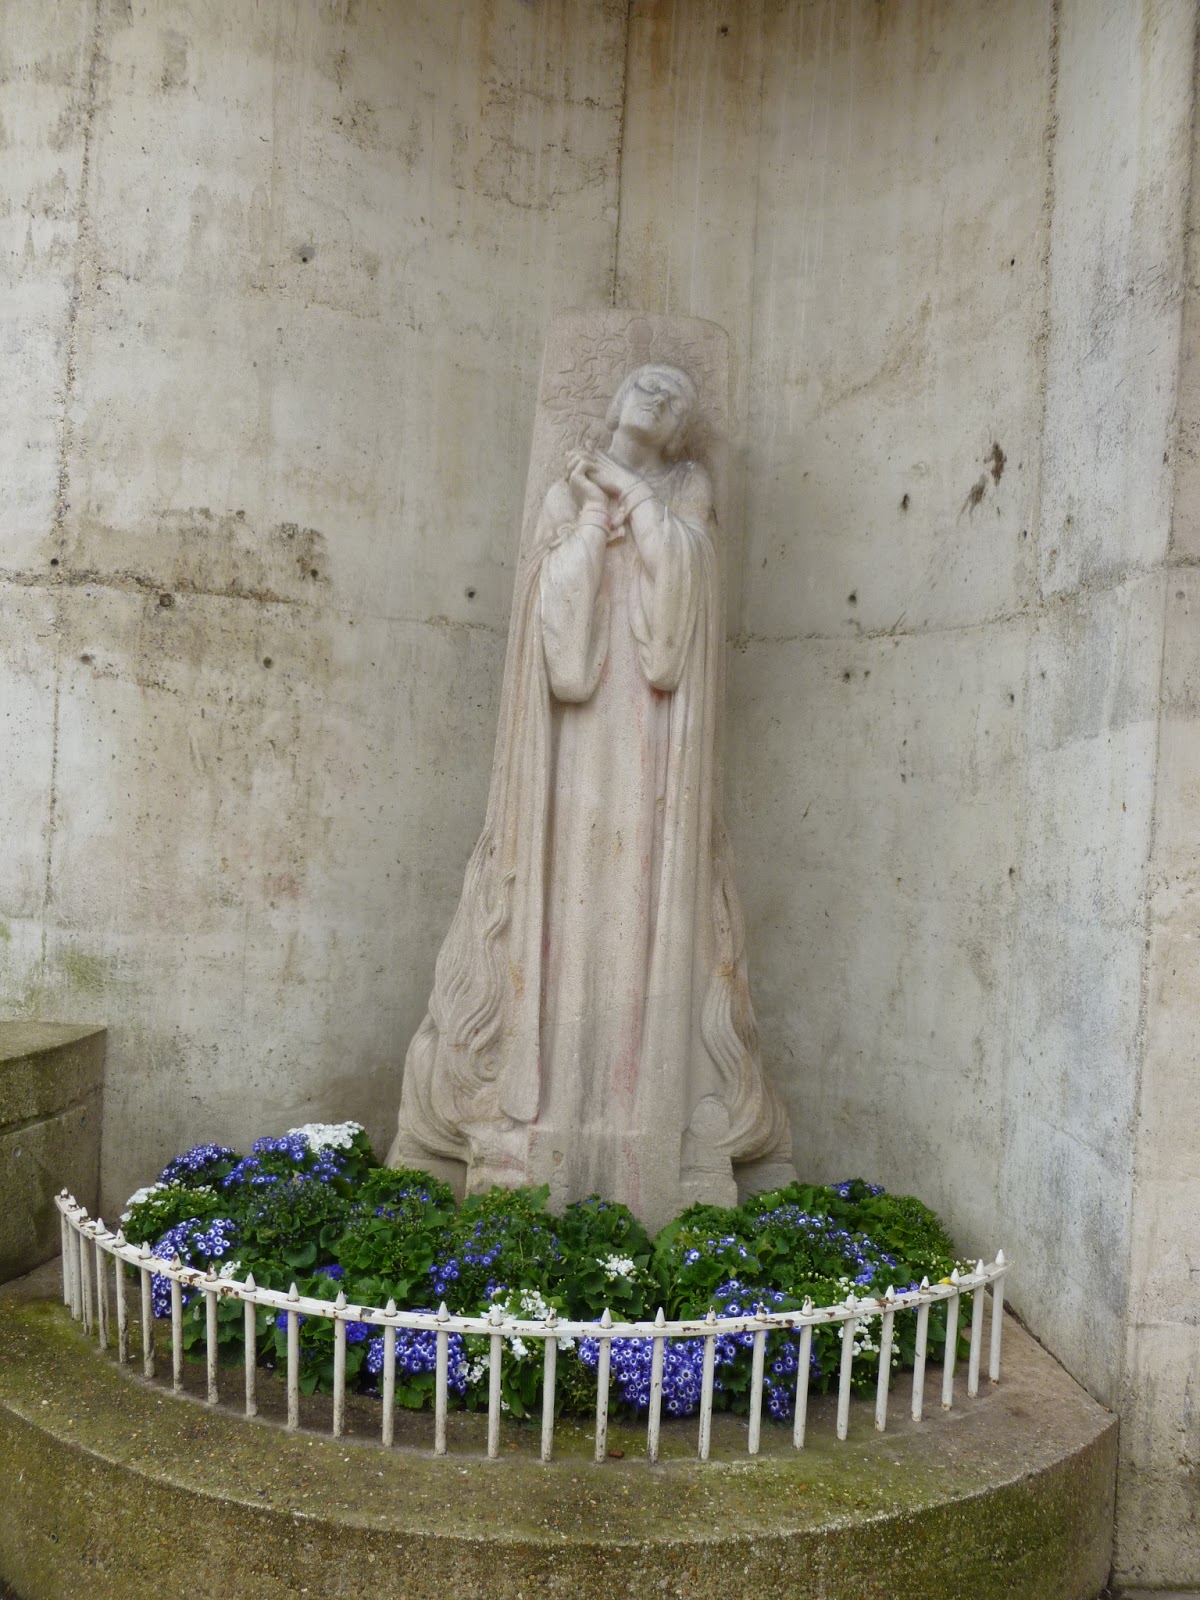 Photoops Statue of Religious Figure Saint Joan of Arc Rouen, France